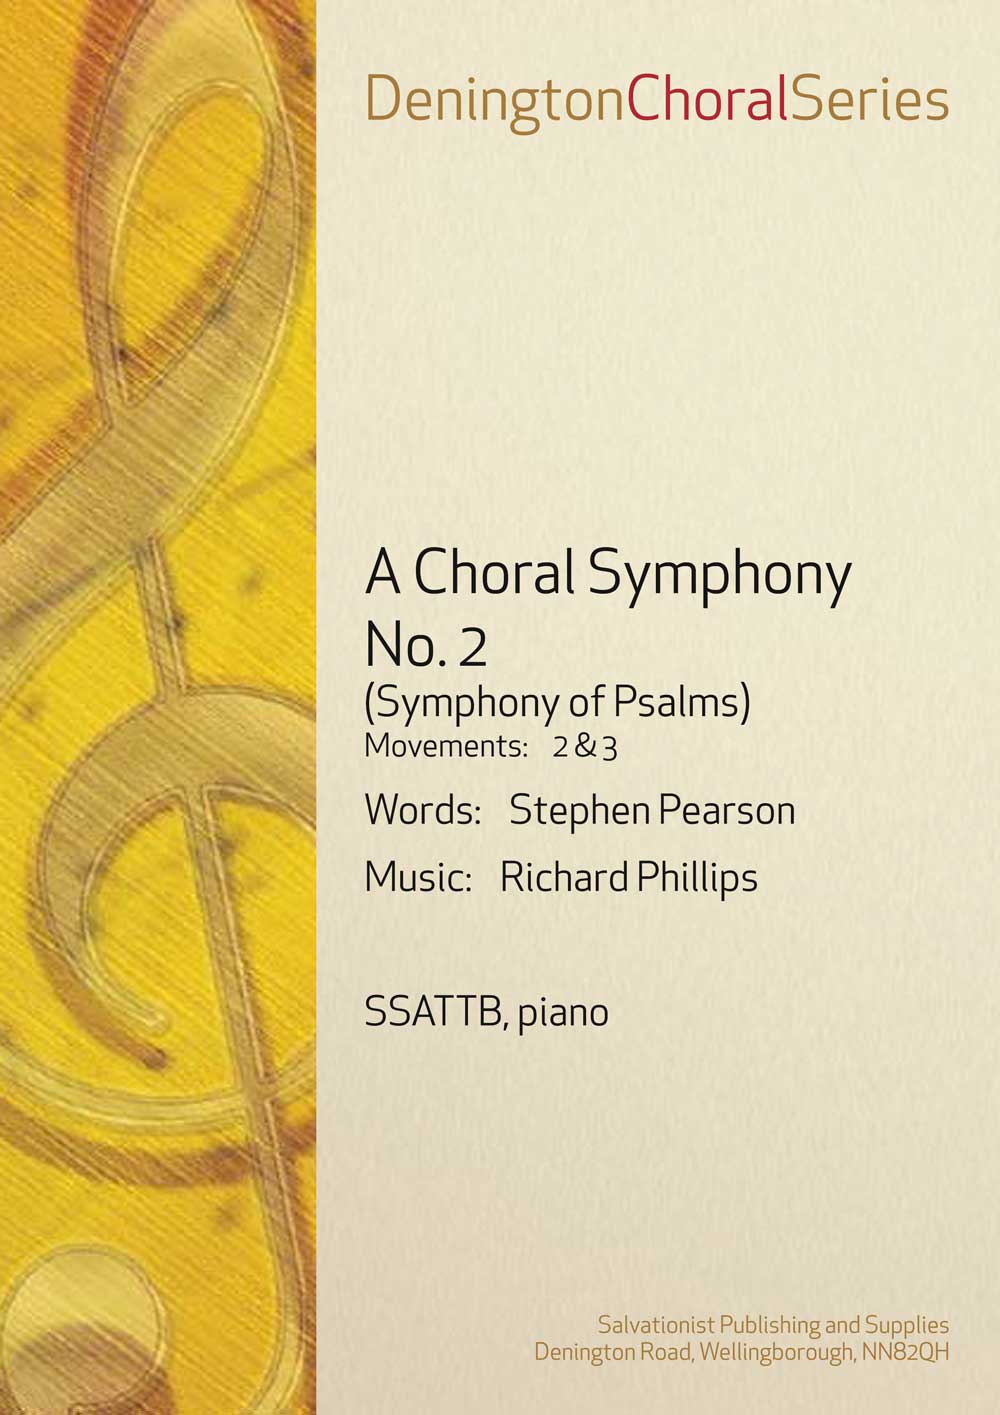 Choral Symphony No.2, Movements 2 & 3 (SSATTB Choral Octavo)